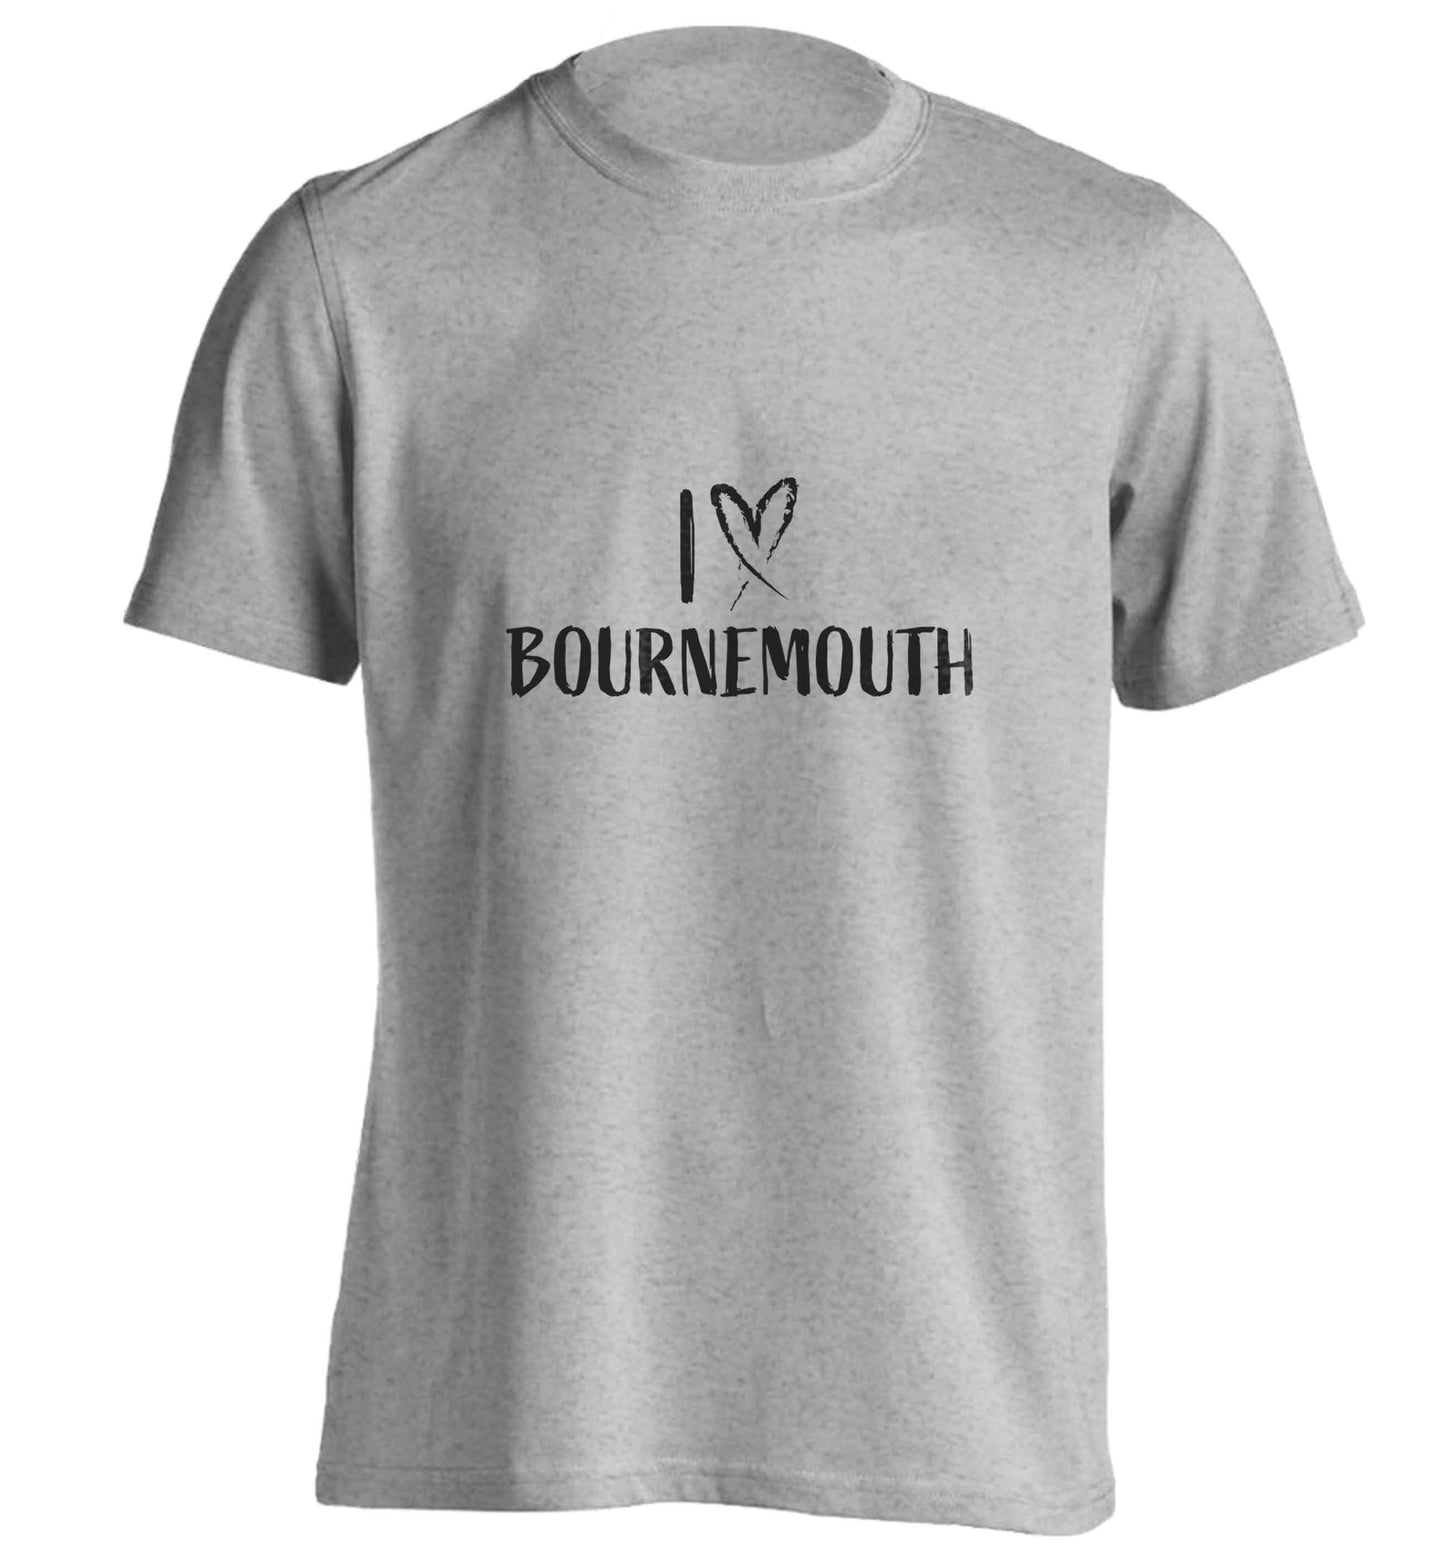 I love Bournemouth adults unisex grey Tshirt 2XL